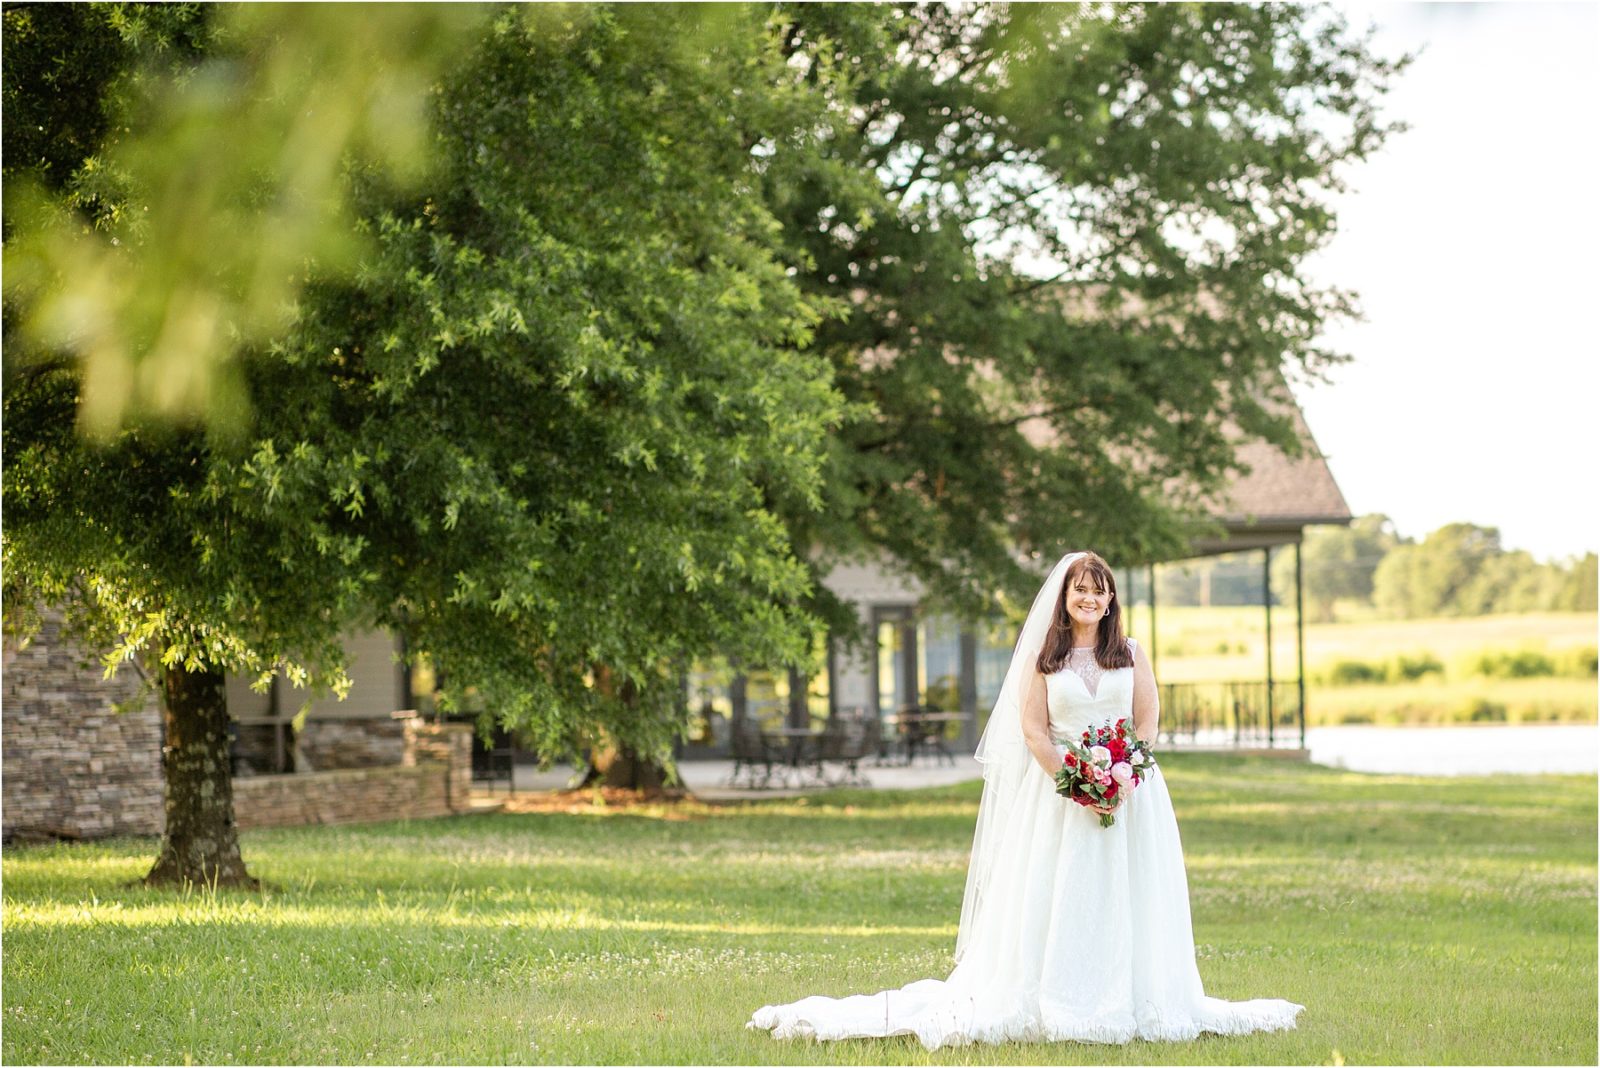 The Oaks Bride